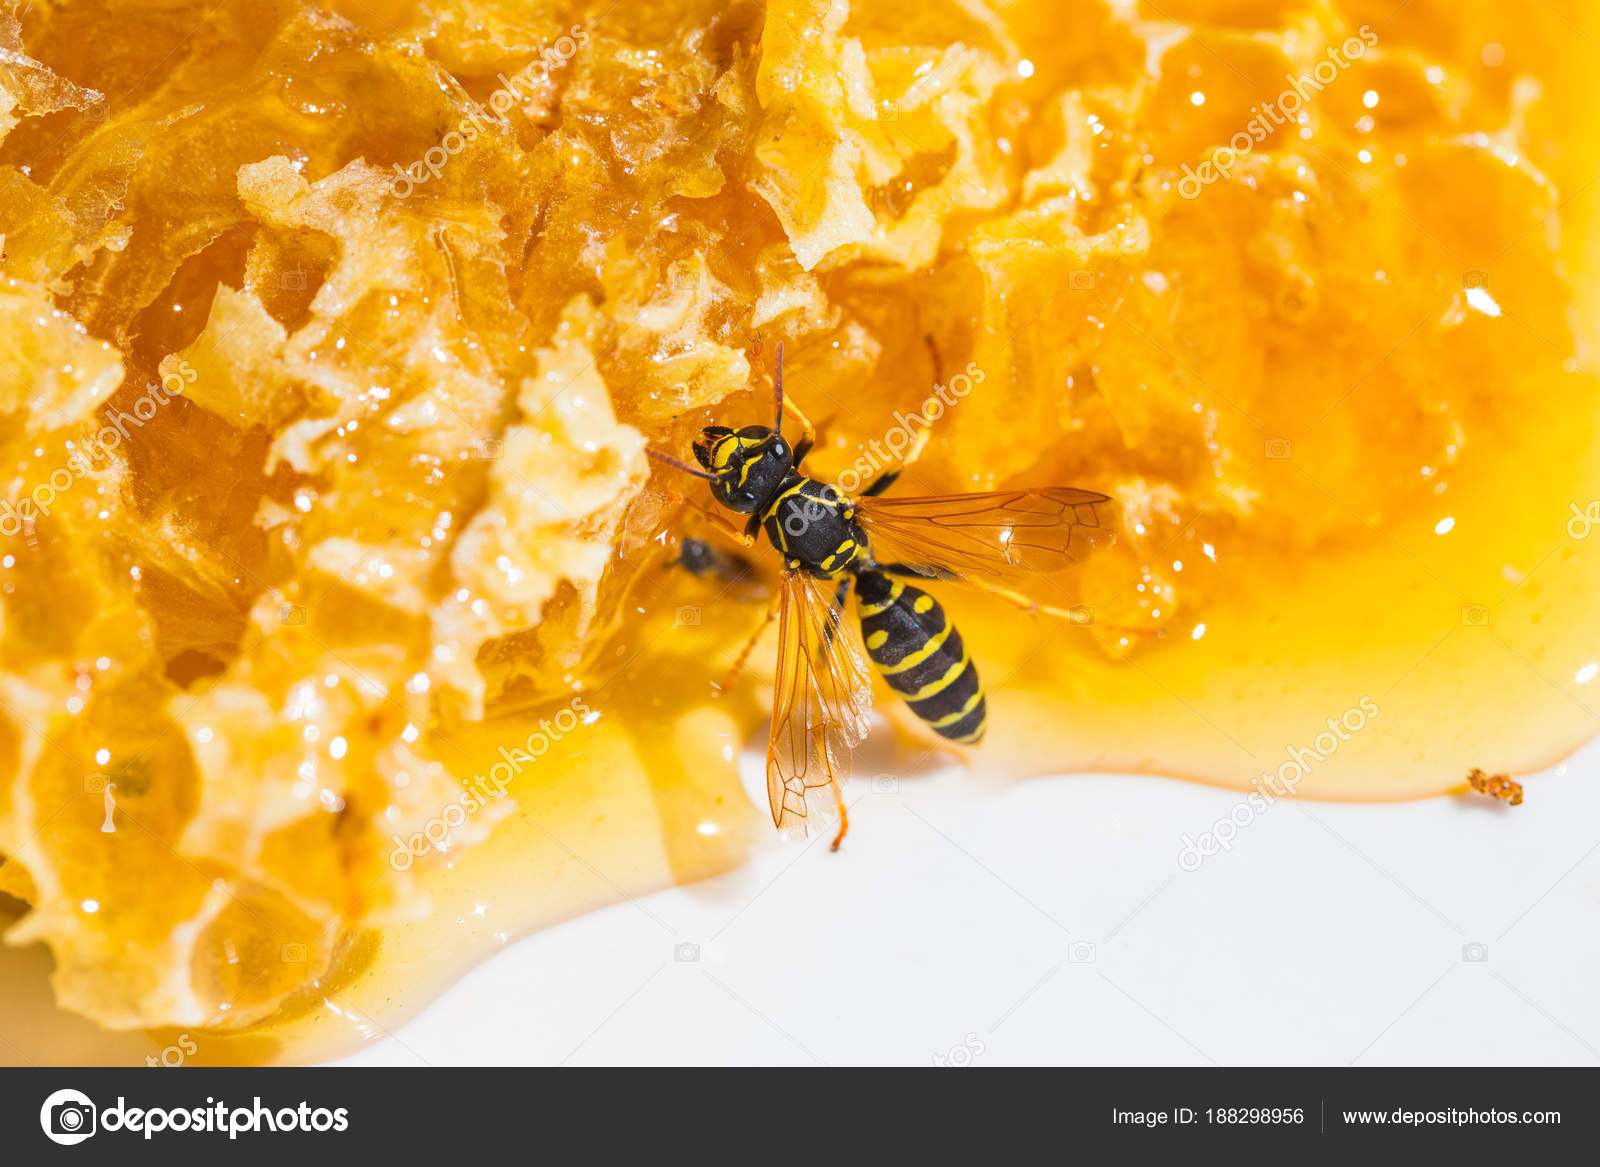 Honey in comb stock image. Image of medicine, closeup - 39388837